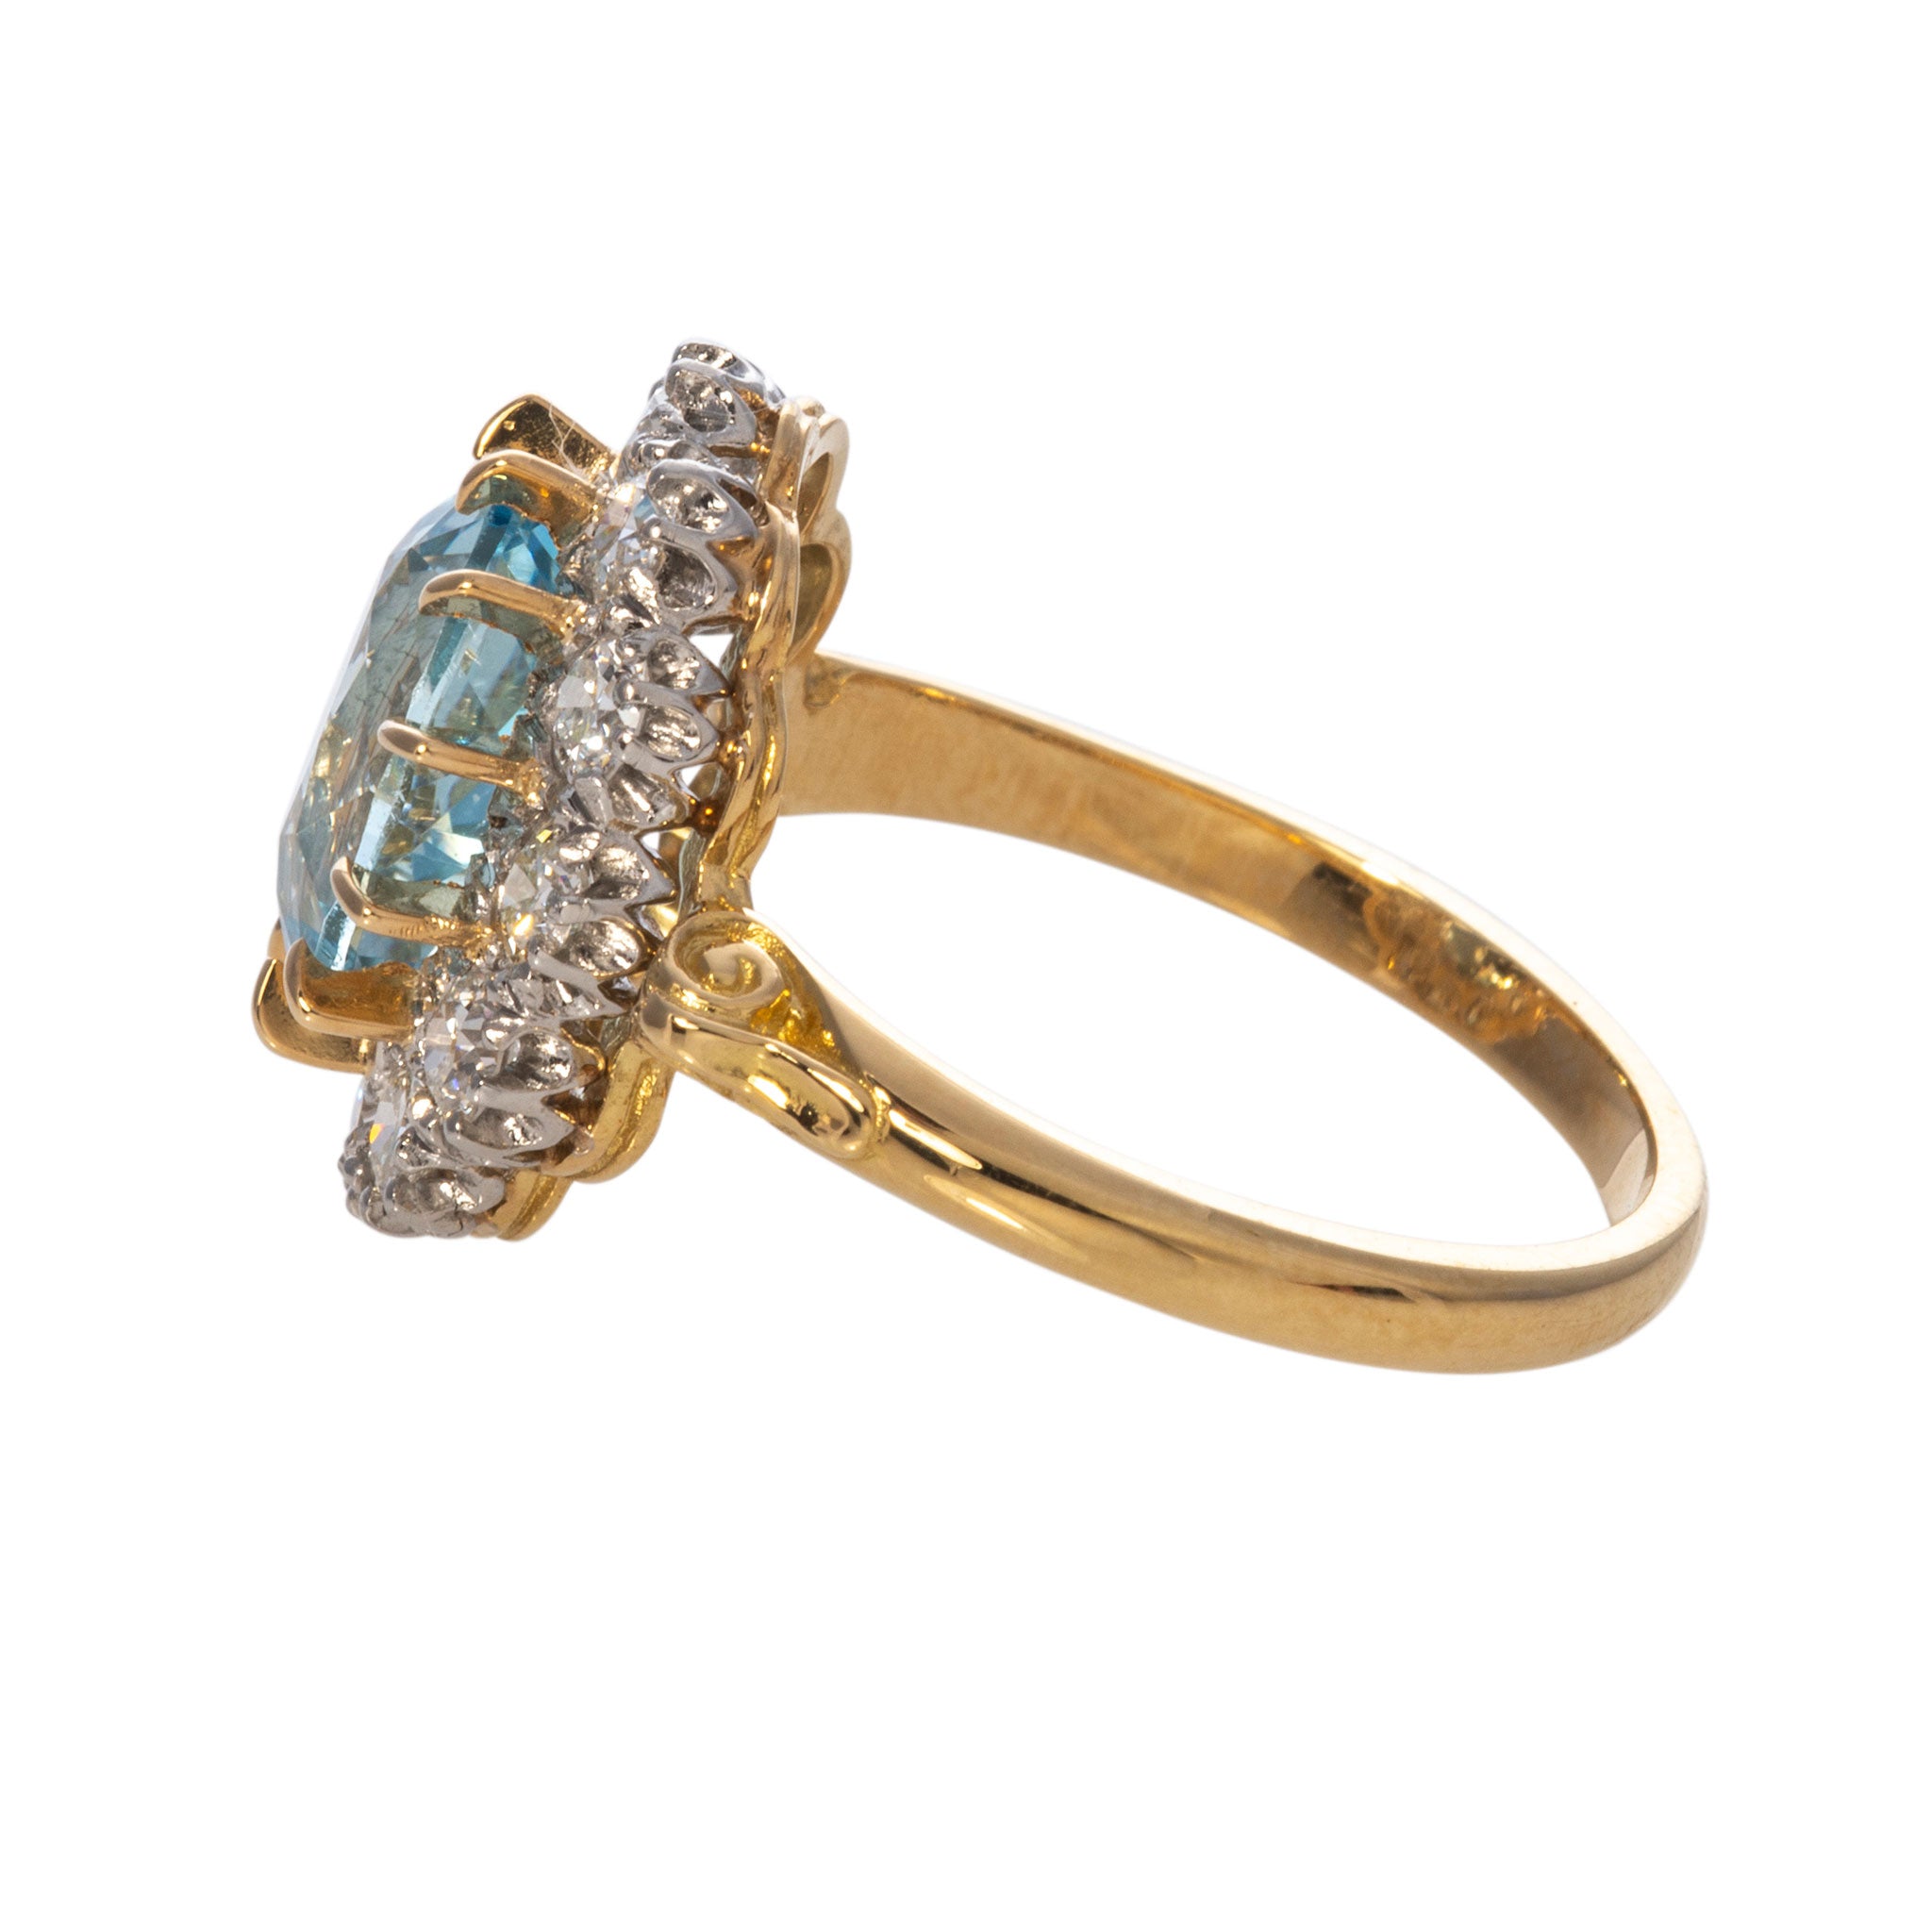 Victorian Style 2.32ct Aquamarine & Diamond Cluster Ring